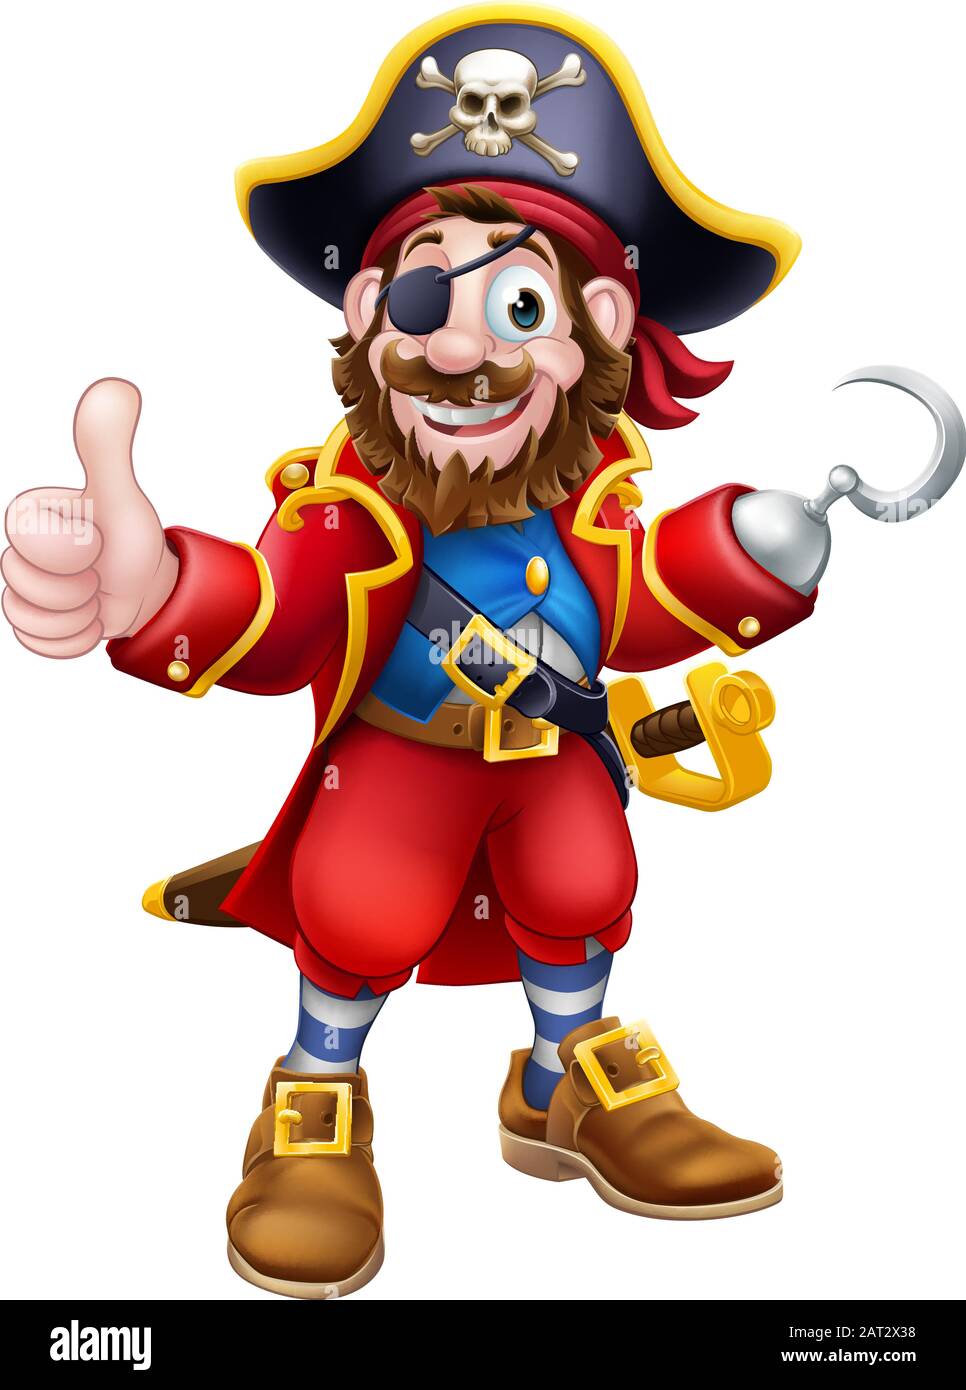 Pirate Captain Cartoon Character Mascot Stock Vector